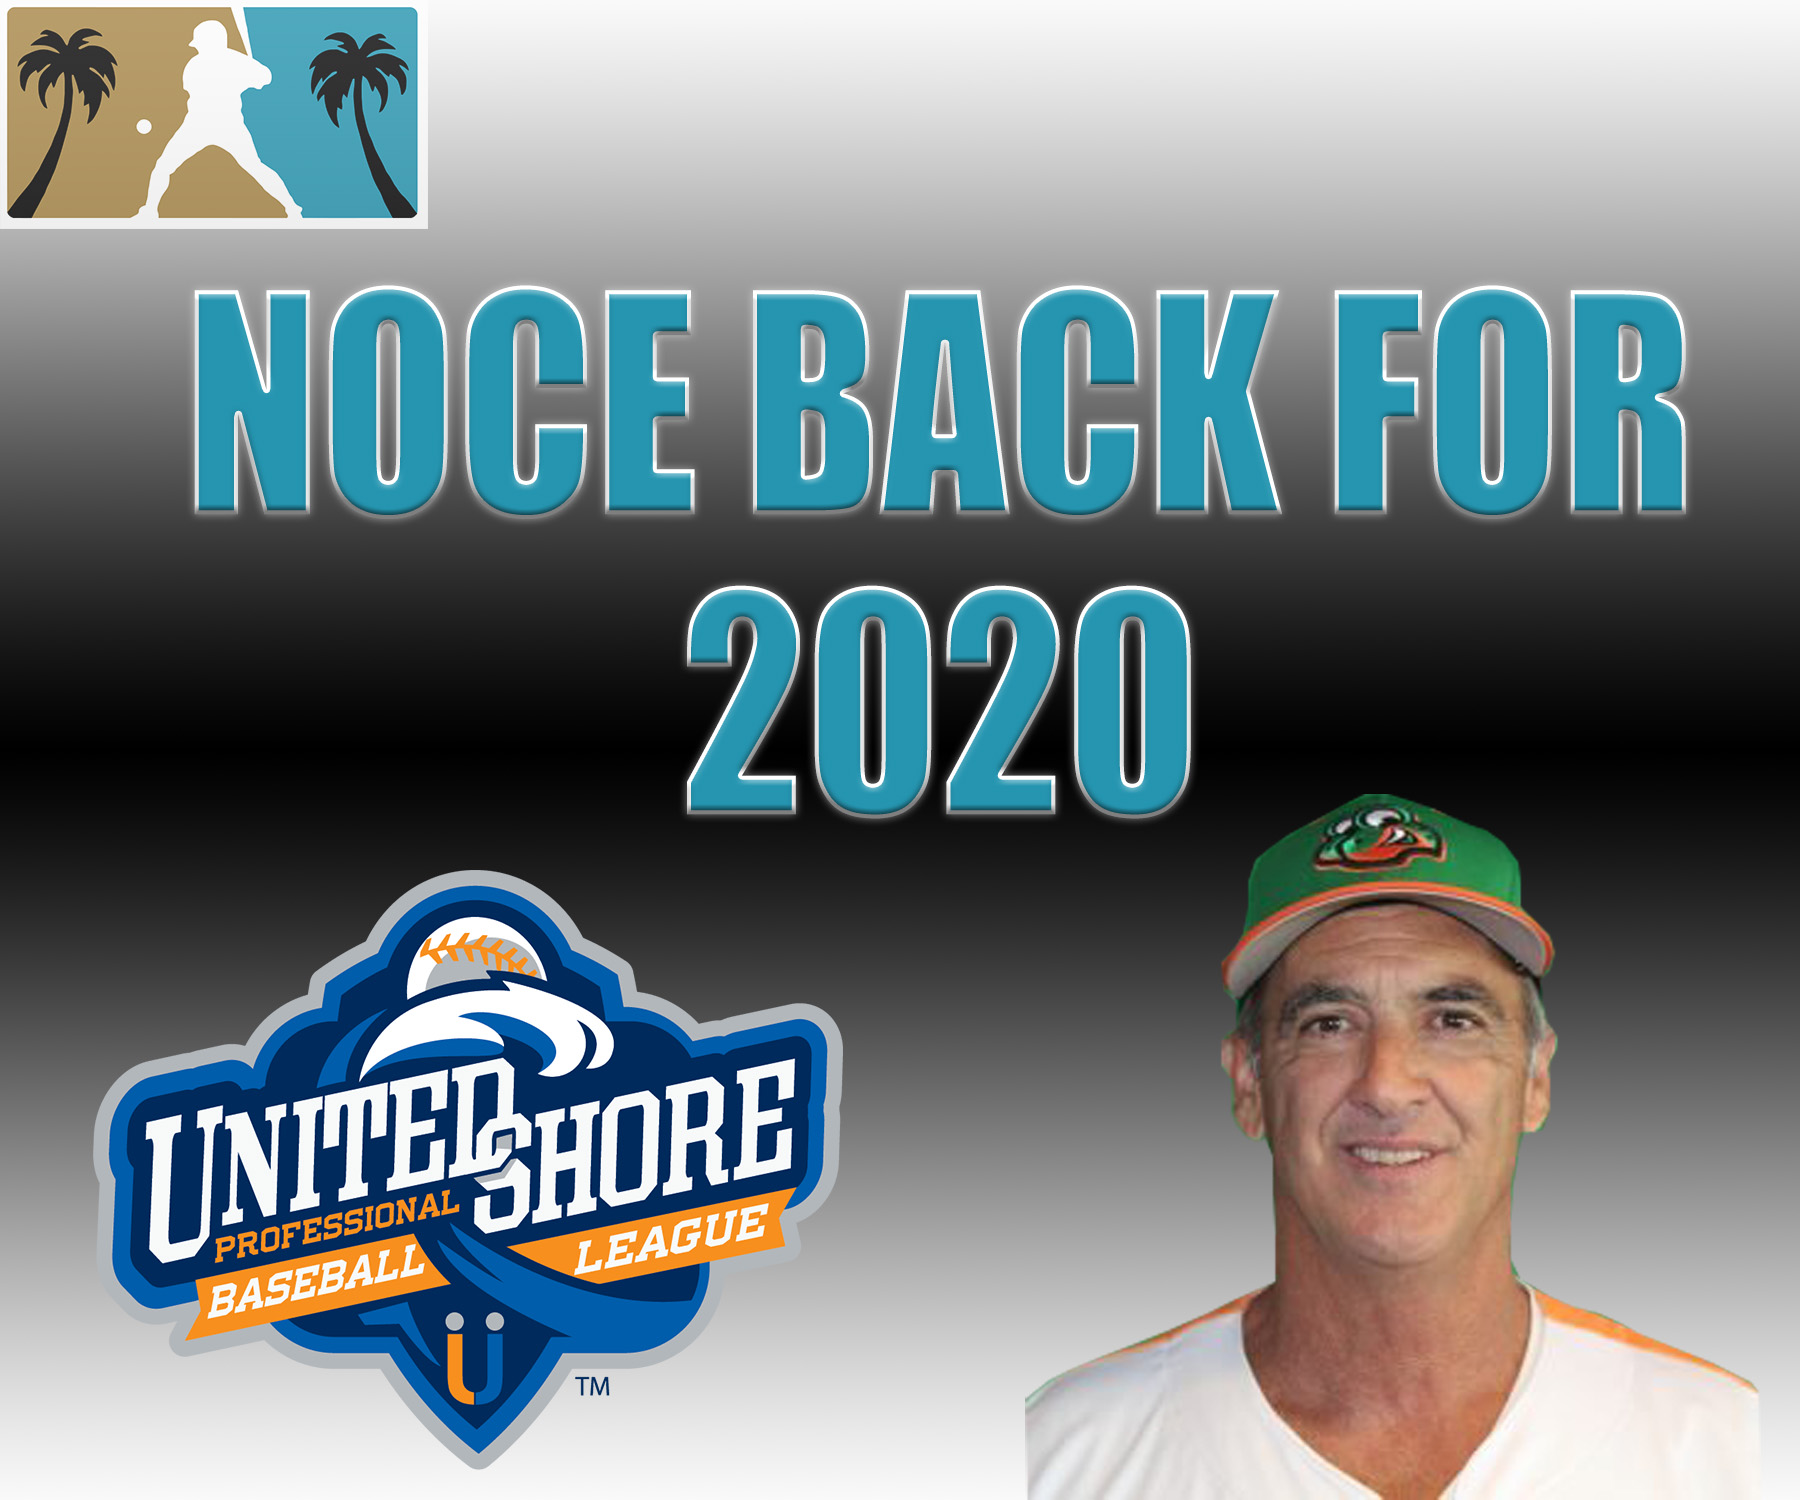 Paul Noce Returns for 2020 Season